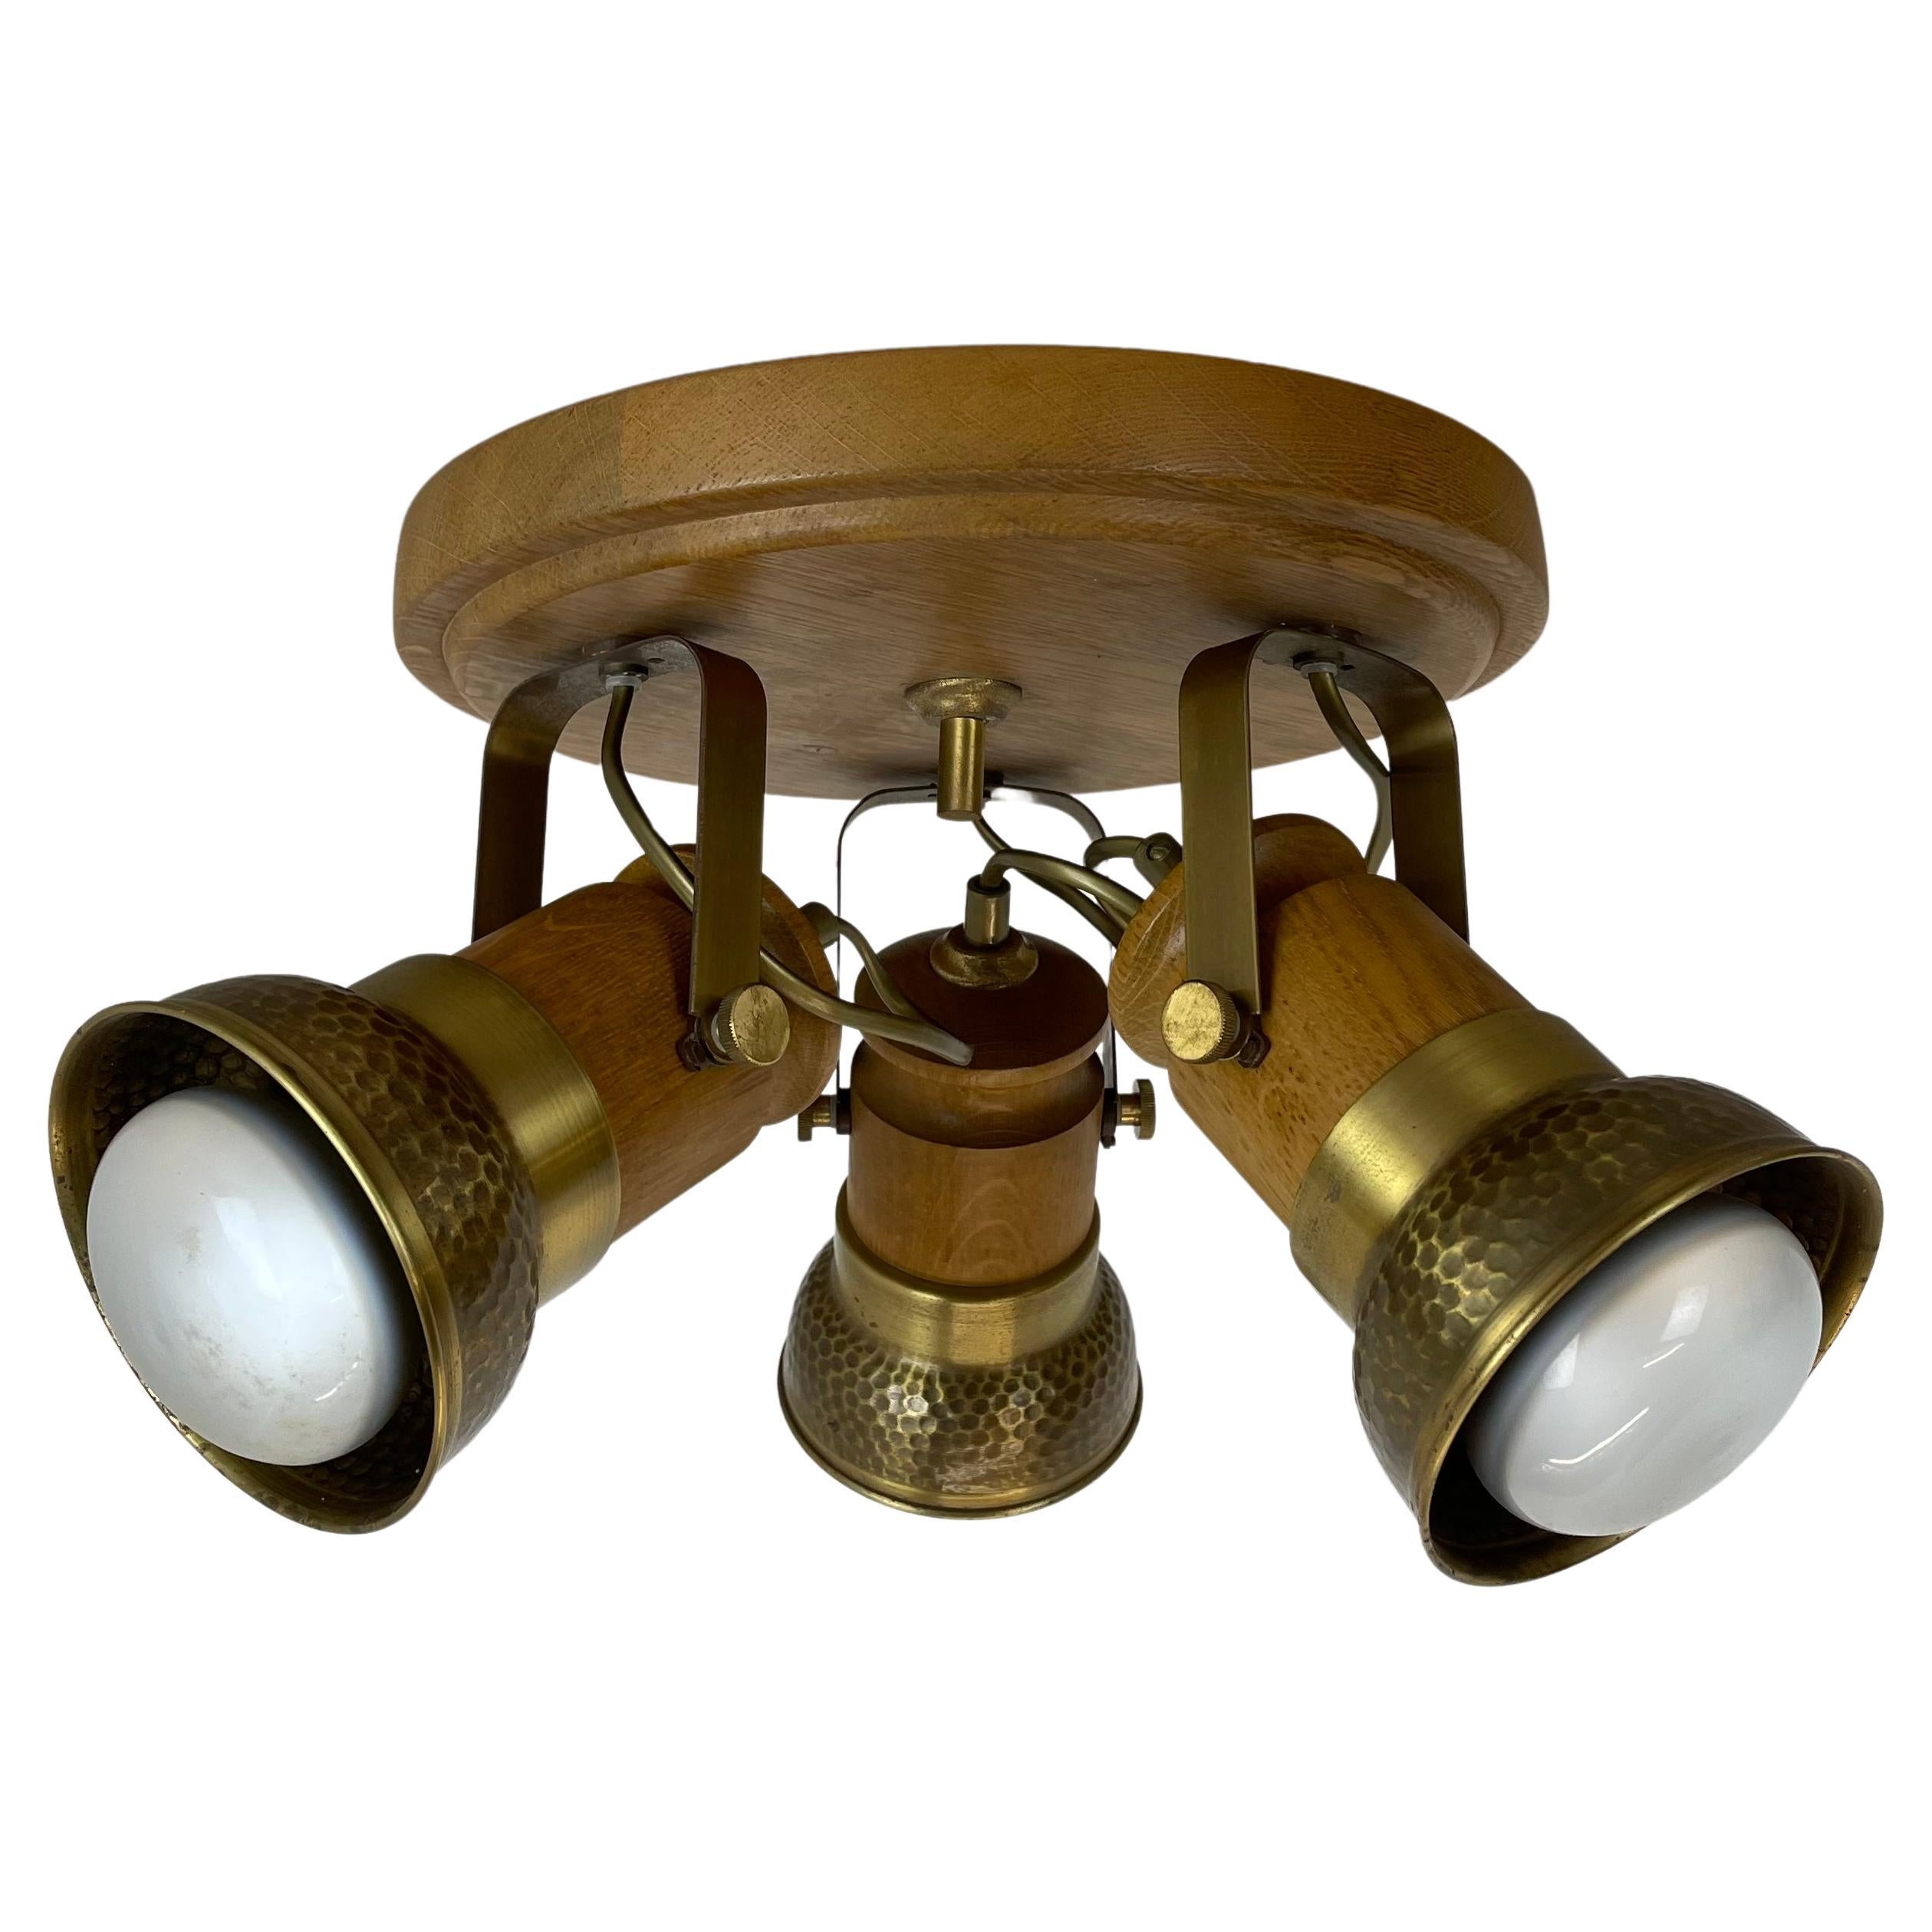 modernist 3-spot brass and oak flushmount ceiling light by TEMDE Lights, Germany